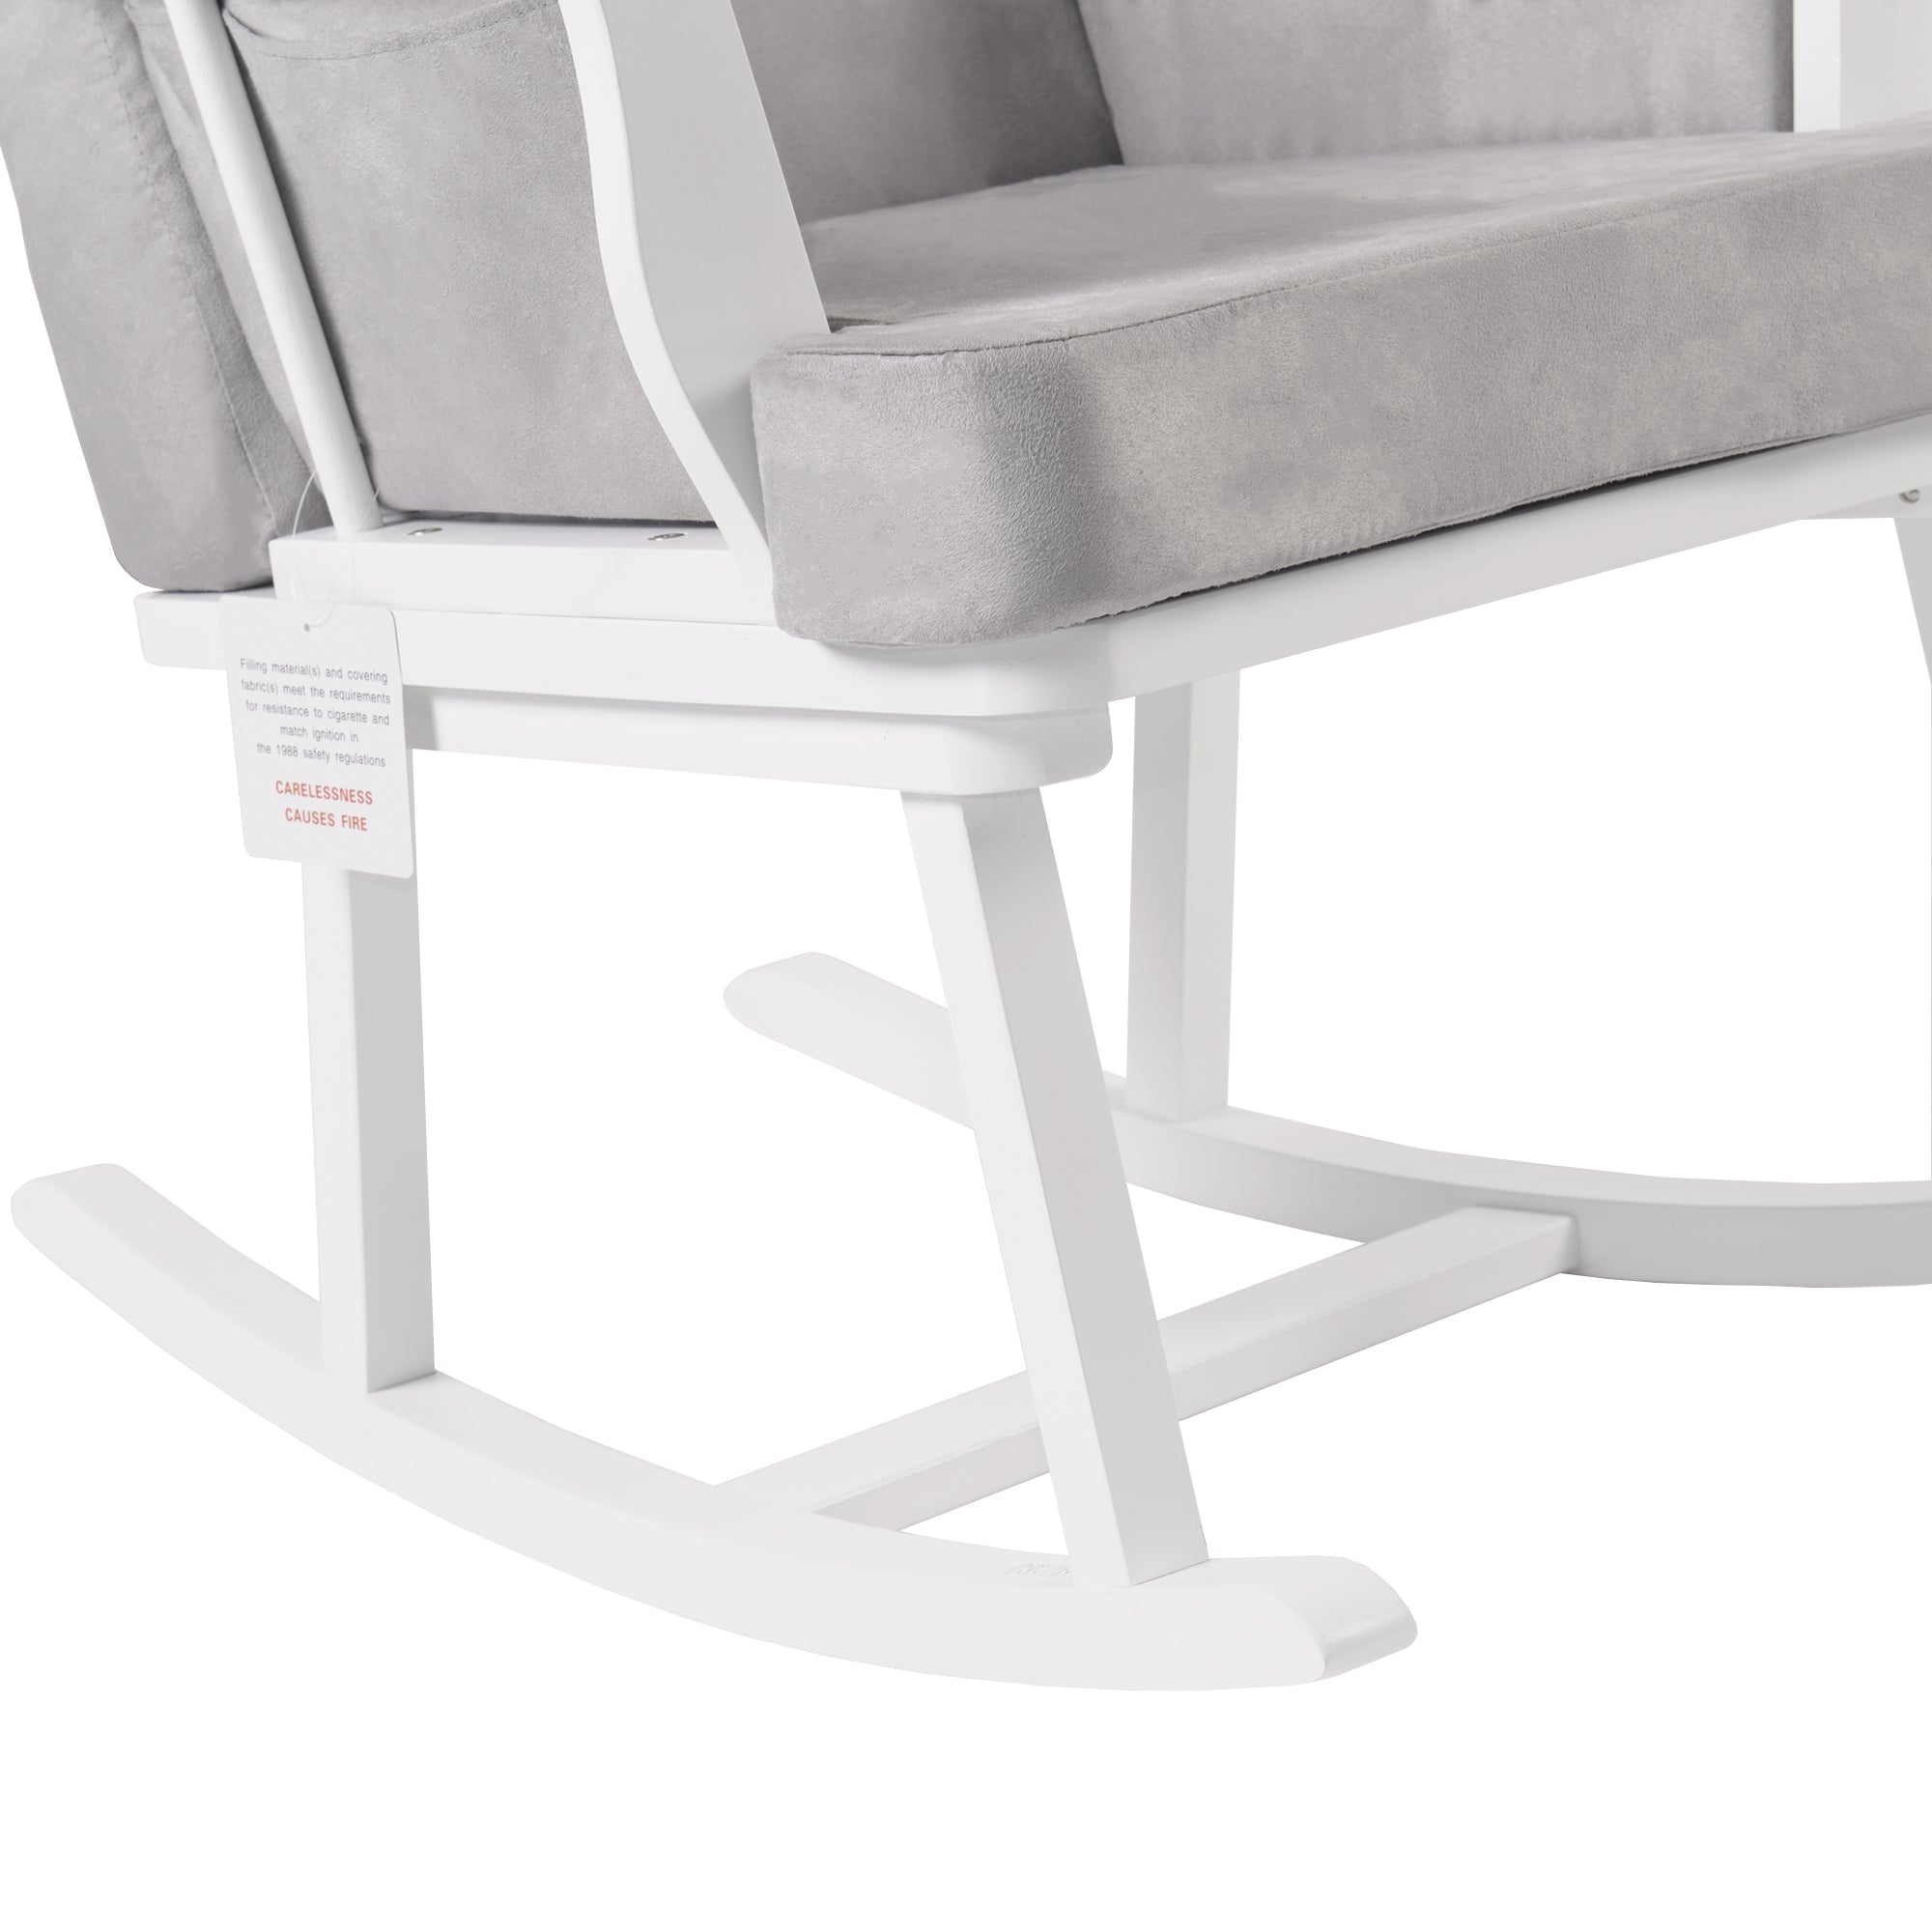 Haldon Nursing Rocking Chair White & Light Grey - 15% OFF Applied at Checkout